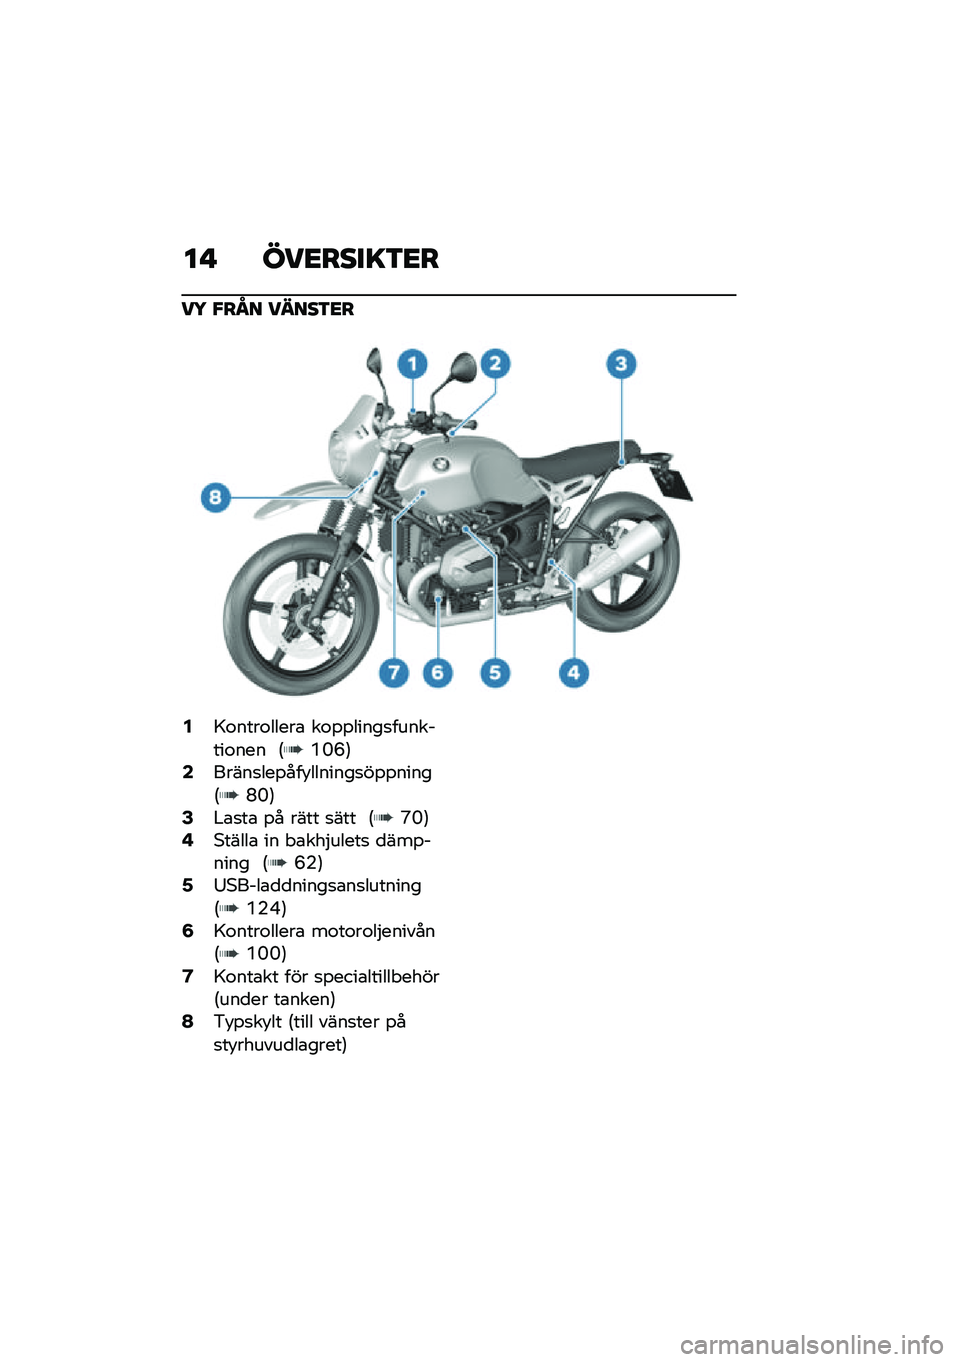 BMW MOTORRAD R NINE T URVAN G/S 2020  Instruktionsbok (in Swedish) ��! ���<����=�3�<�
��5 �#��N� �����3�<�
�4�>�\f����\f�����\b ��\f�%�%�����
��������\f��� �6�B�D�F�7�6�����
���%���!�������
��%�%�����6�H�D�7�8�#